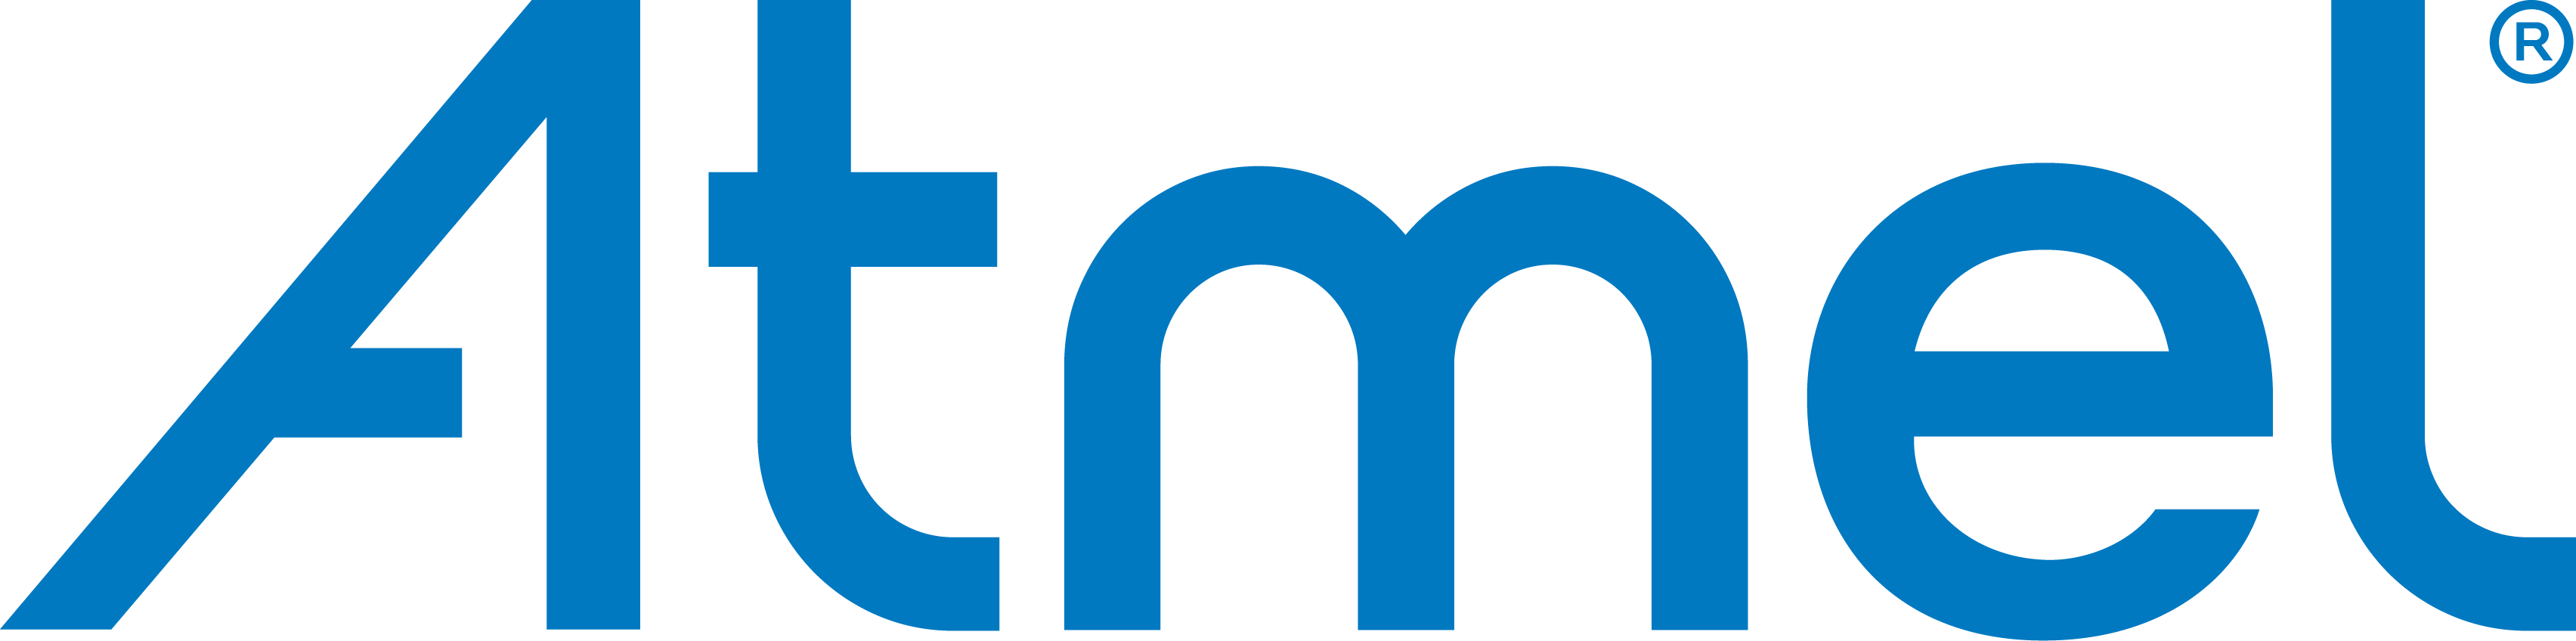 Atmel-Logo